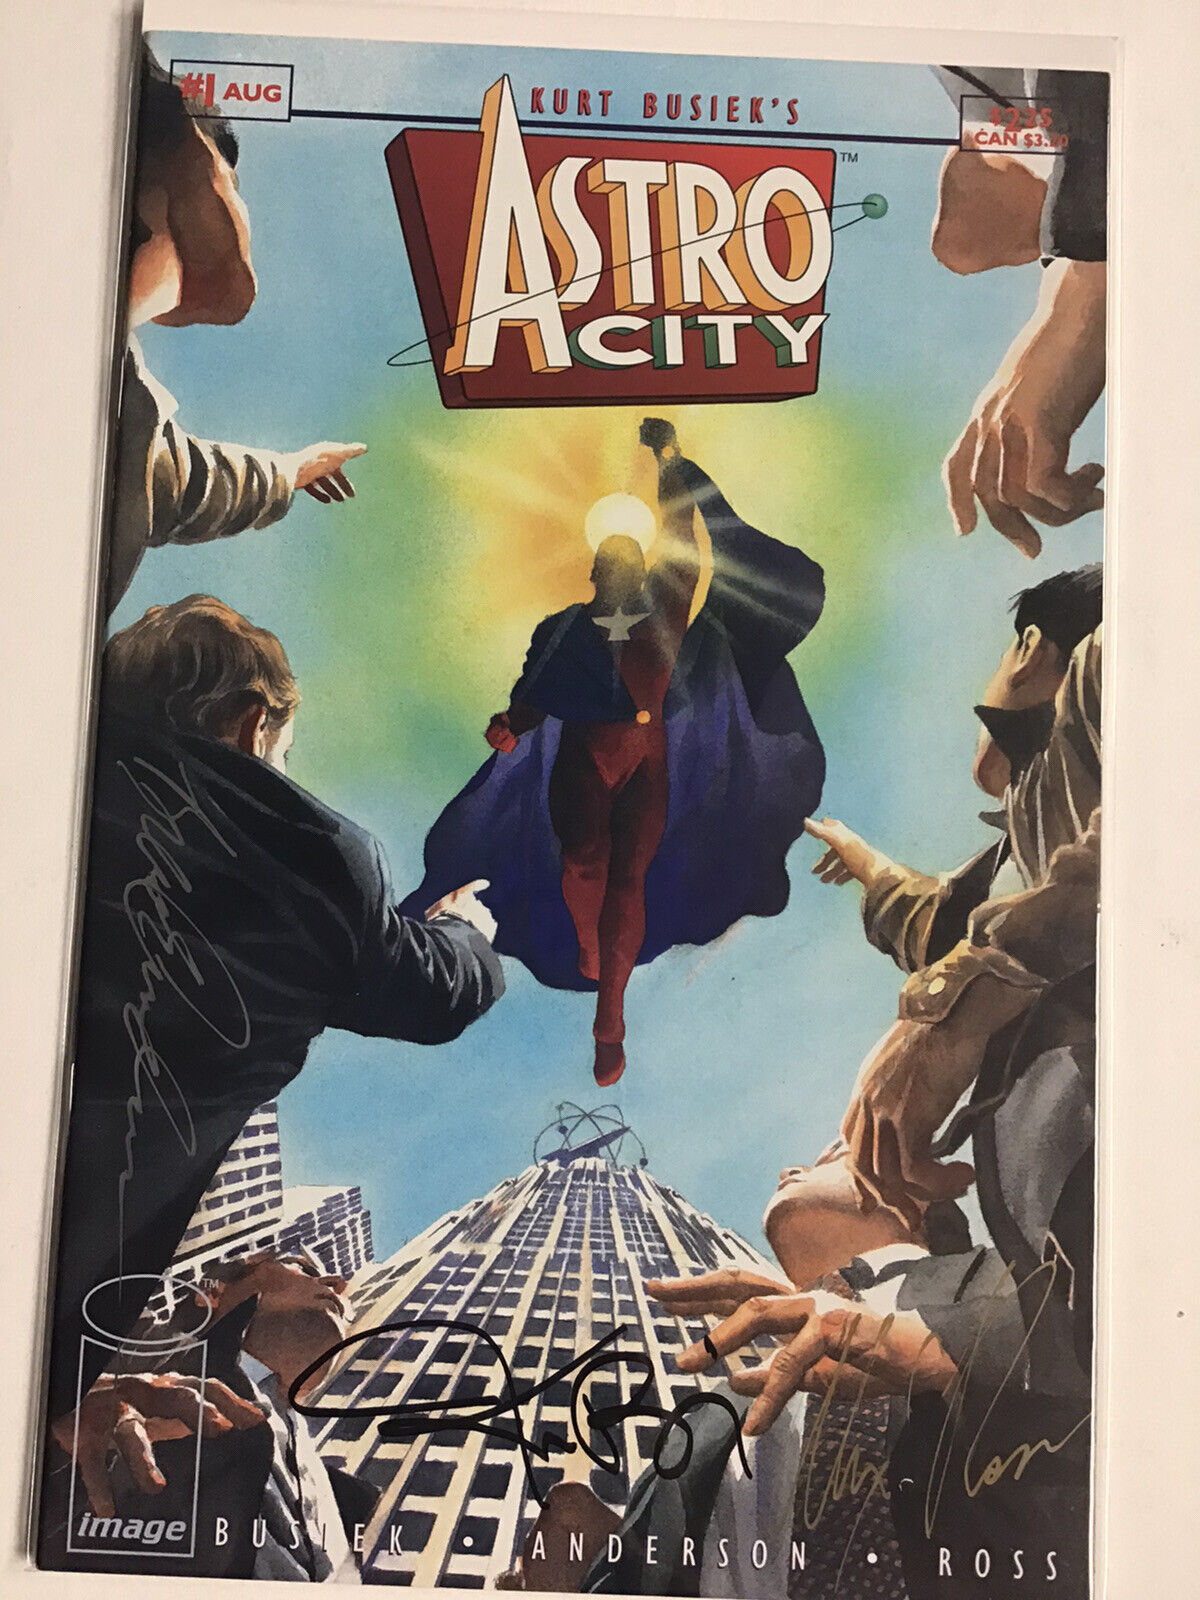 RARE Kurt Busiek's Astro City #1 SIGNED BY Alex Ross, Busiek, Brent Anderson